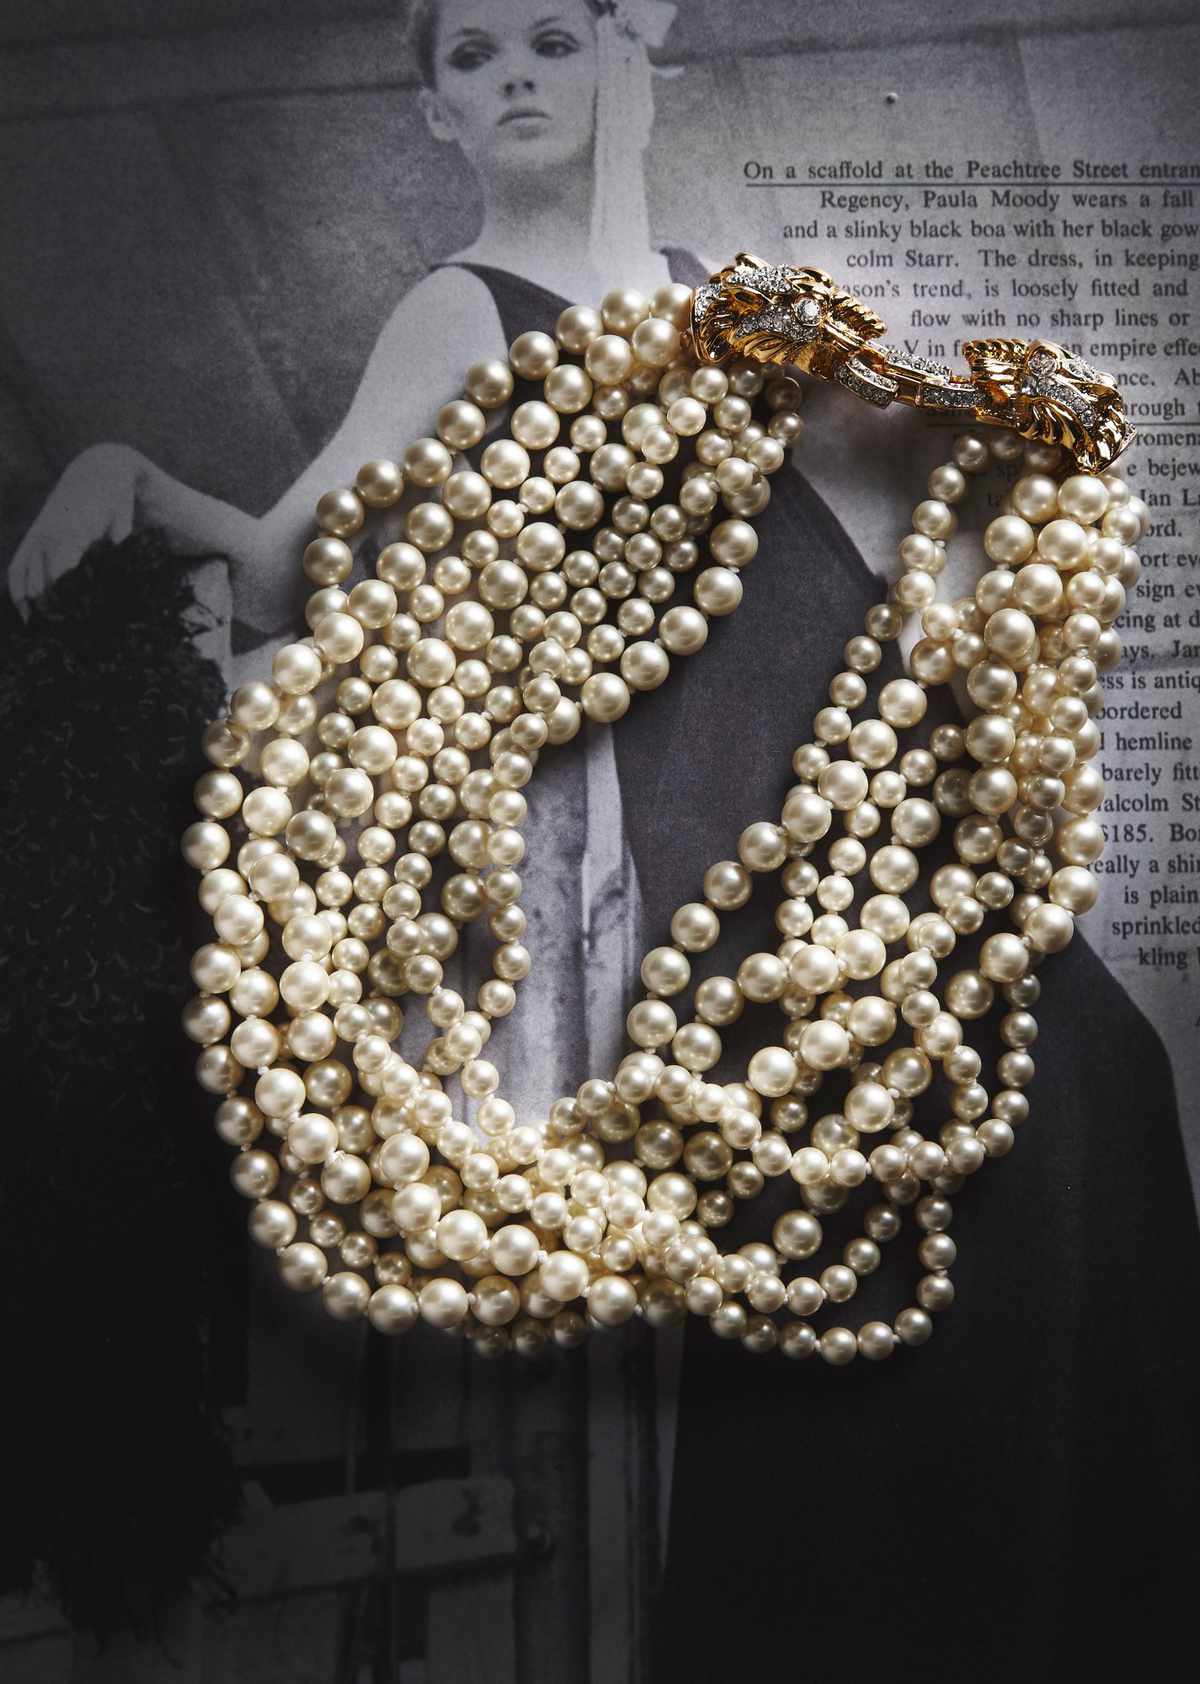 6. Pearls